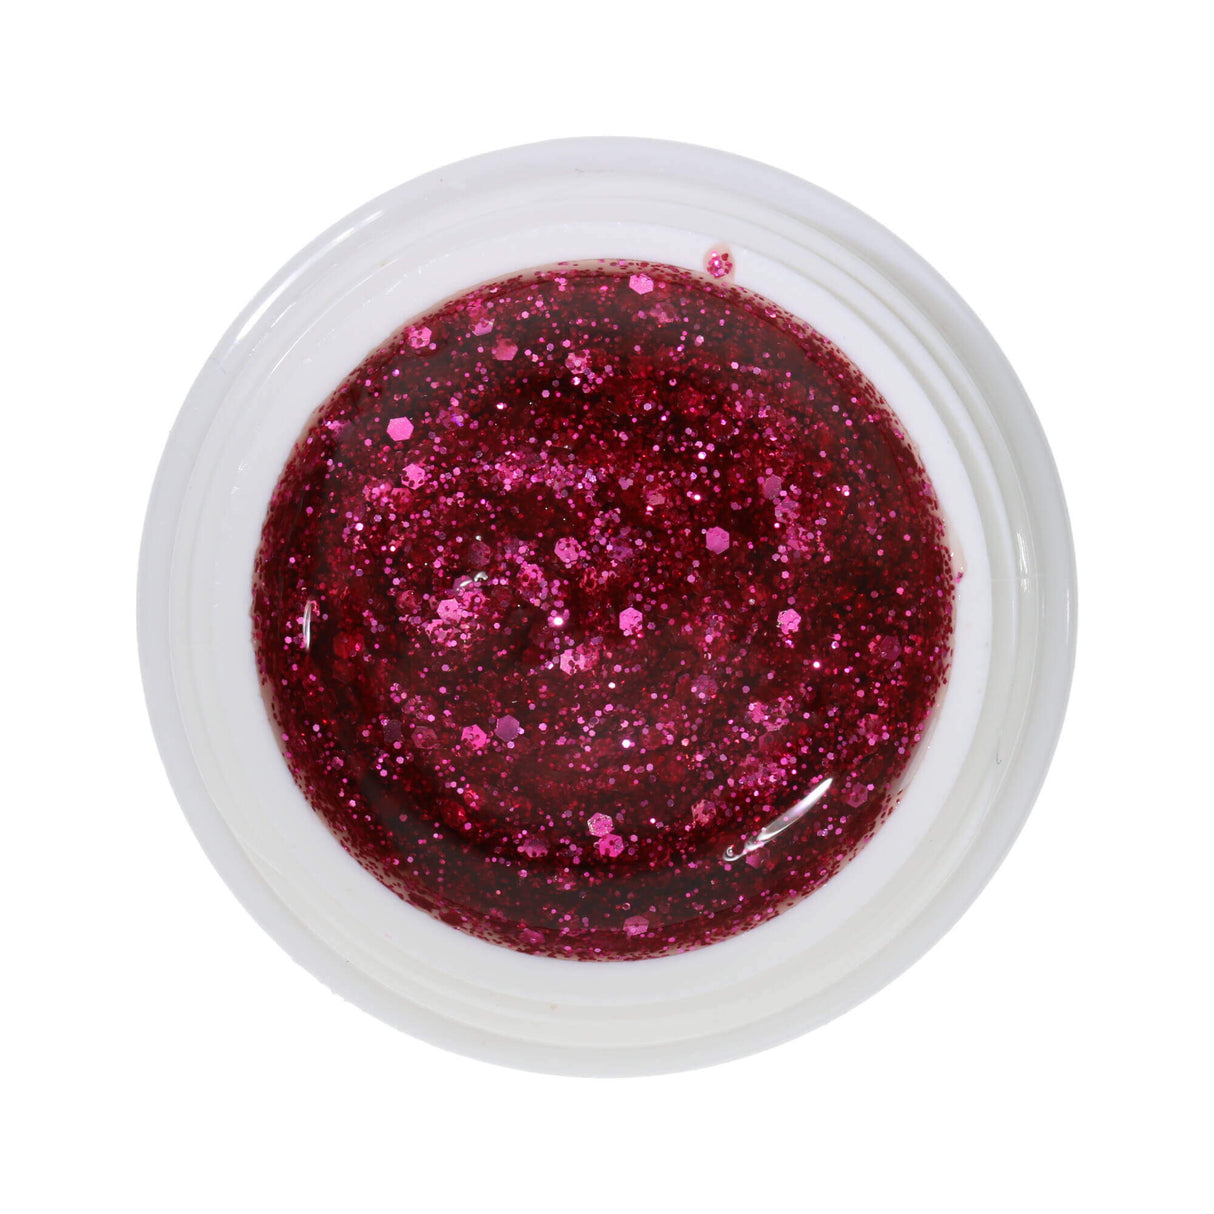 # 299 Premium-GLITTER Color Gel 5ml Classic pink glitter gel dominated by coarse glitter particles